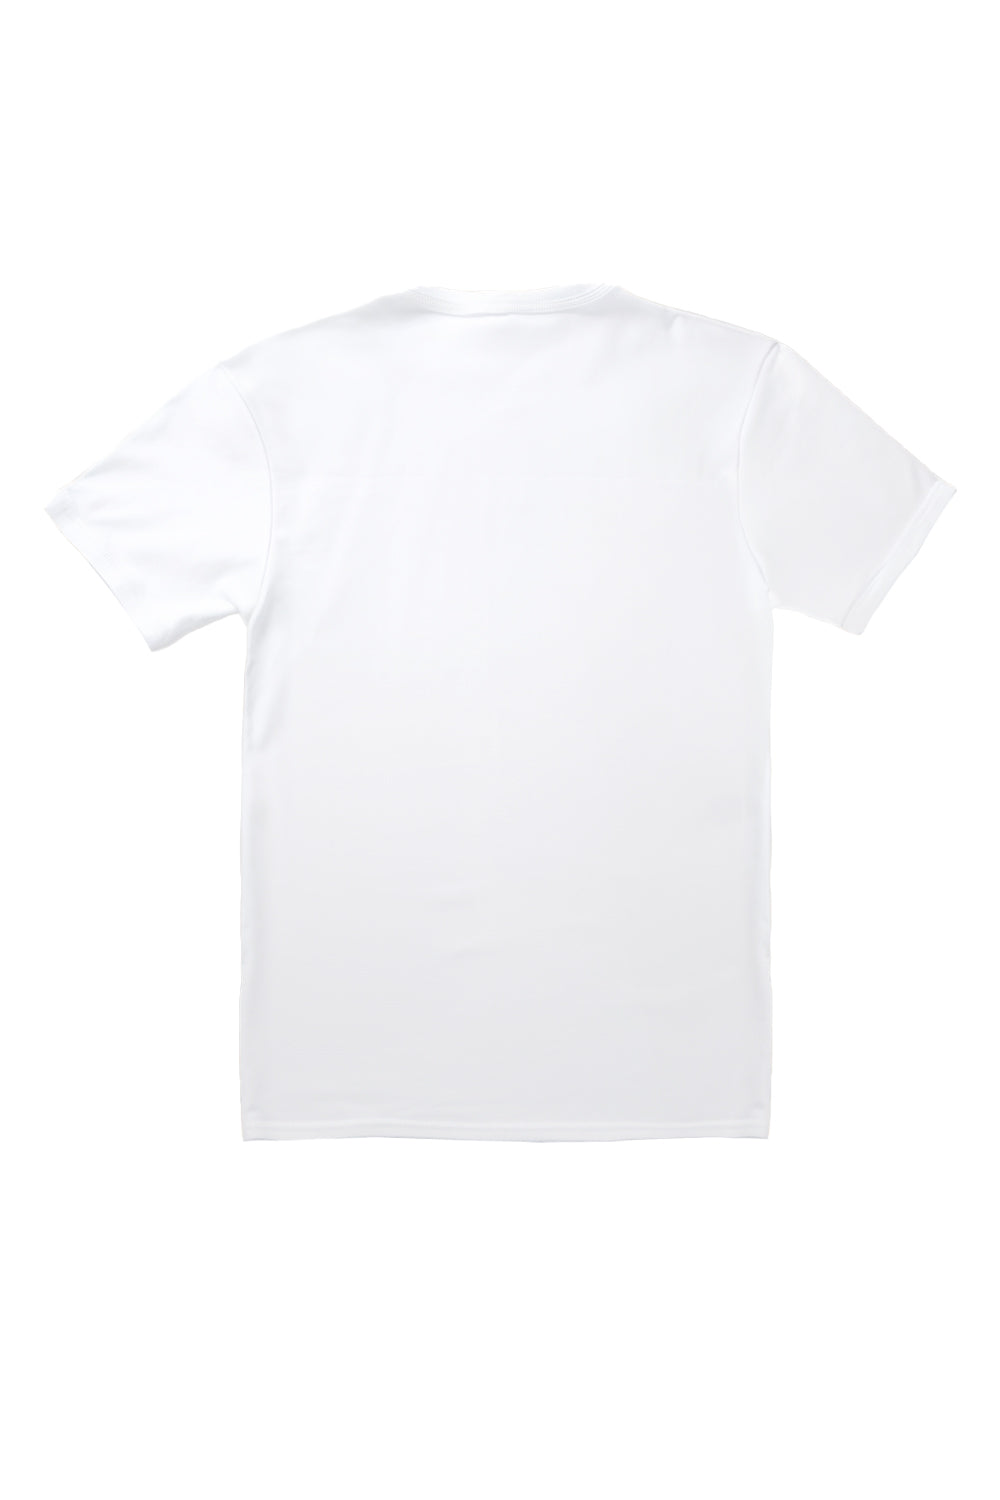 San Francisco T-Shirt in White (Custom Packs)